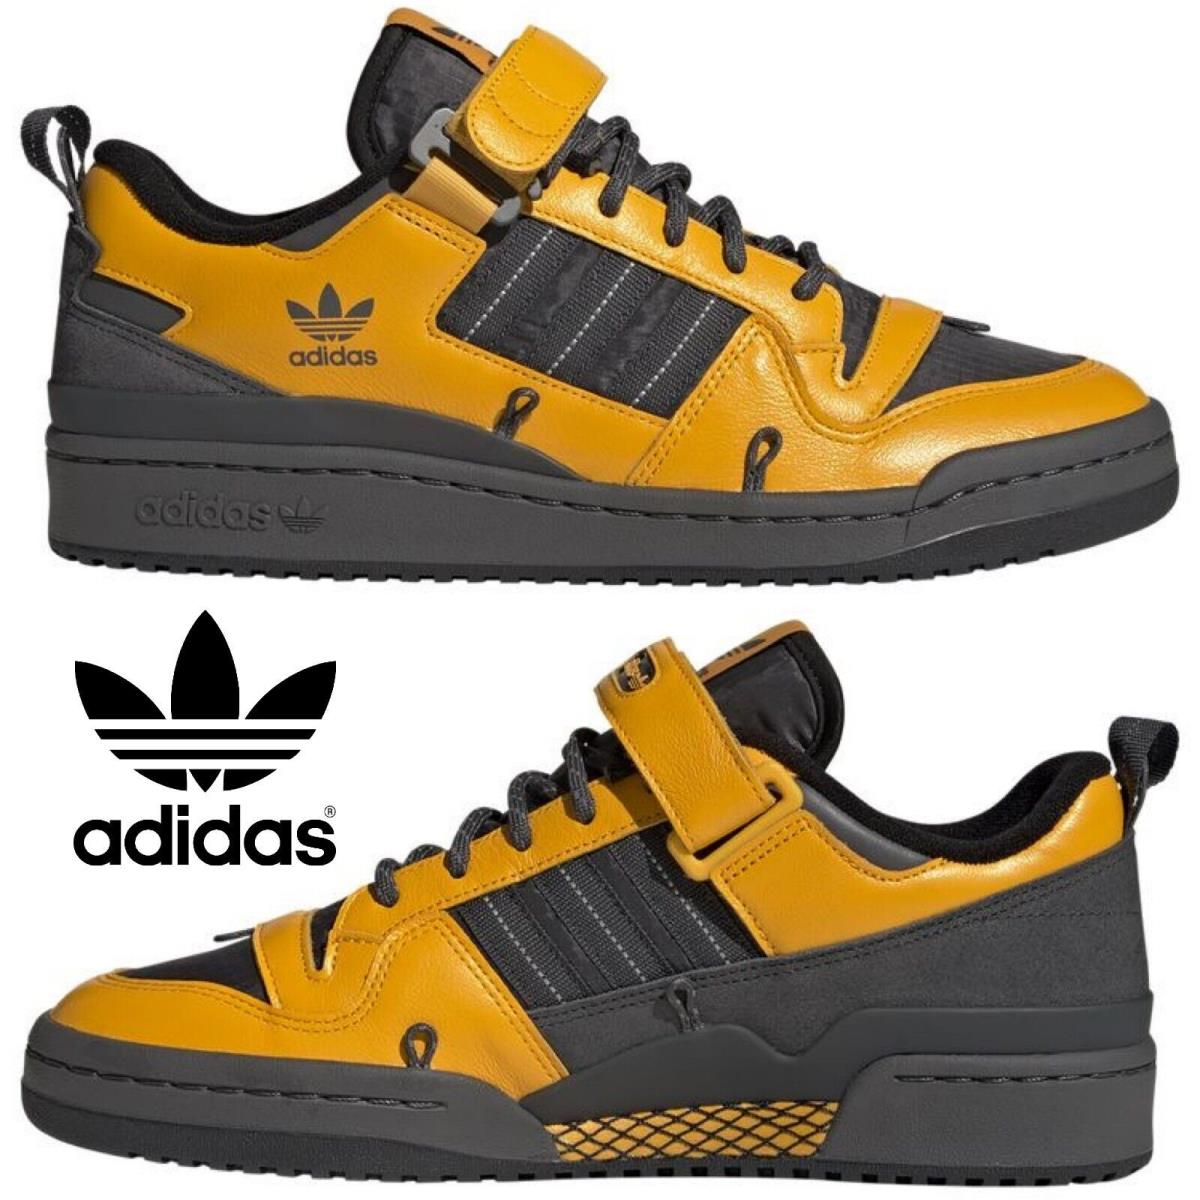 Adidas Originals Forum 84 Low Men`s Sneakers Comfort Sport Casual Shoes Black - Black , Collegiate Gold / Grey Six / Core Black Manufacturer